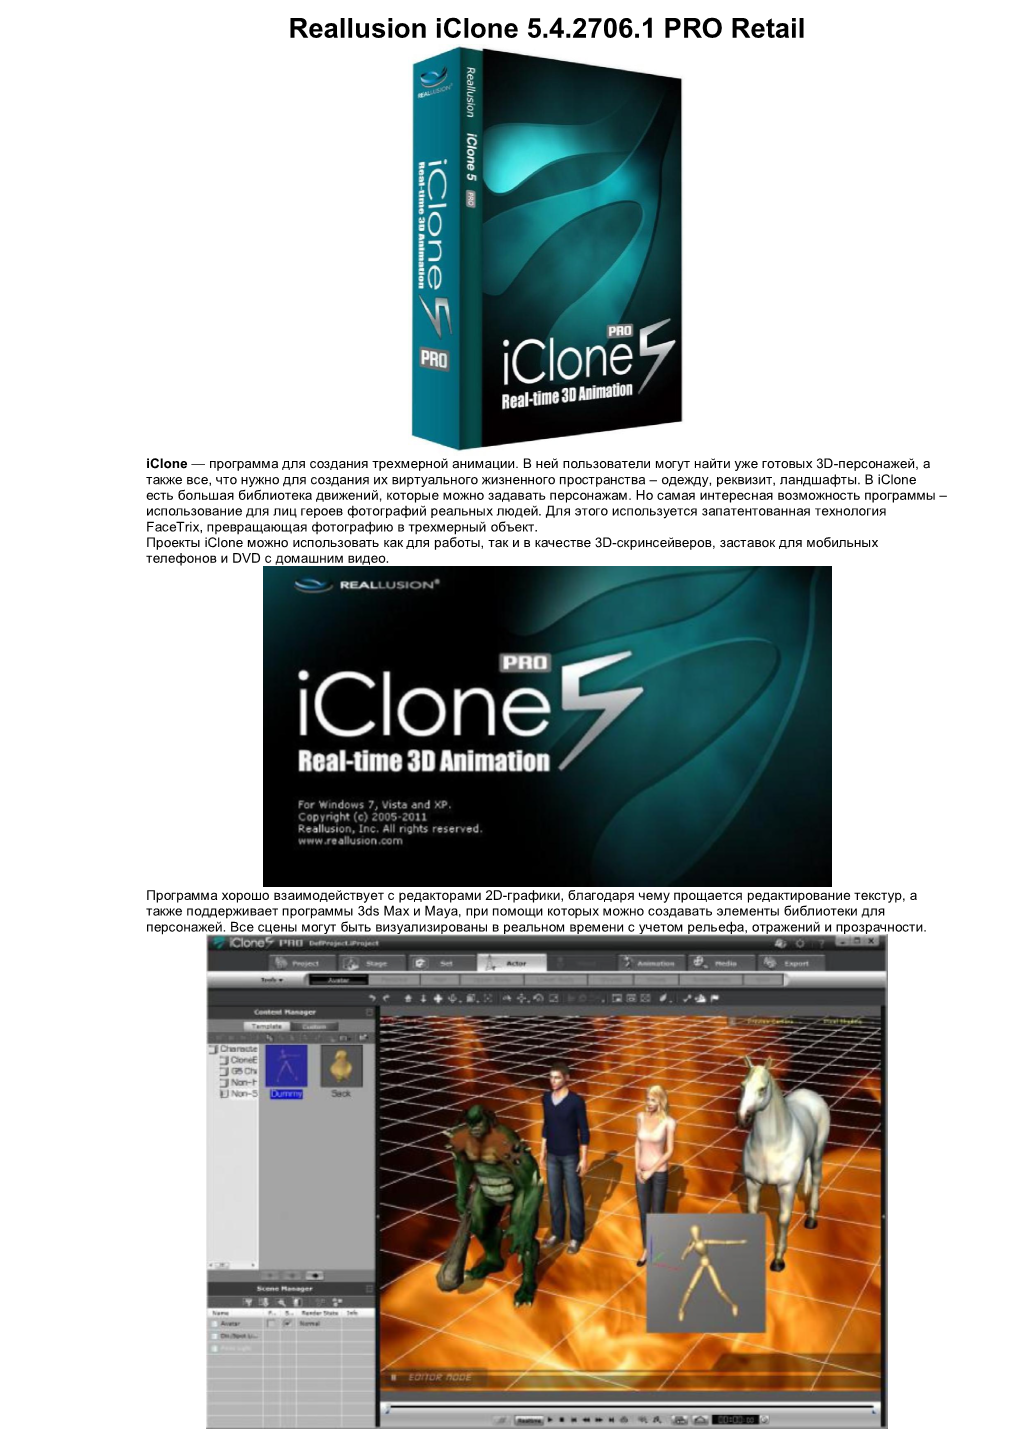 Reallusion Iclone 5.4.2706.1 PRO Retail